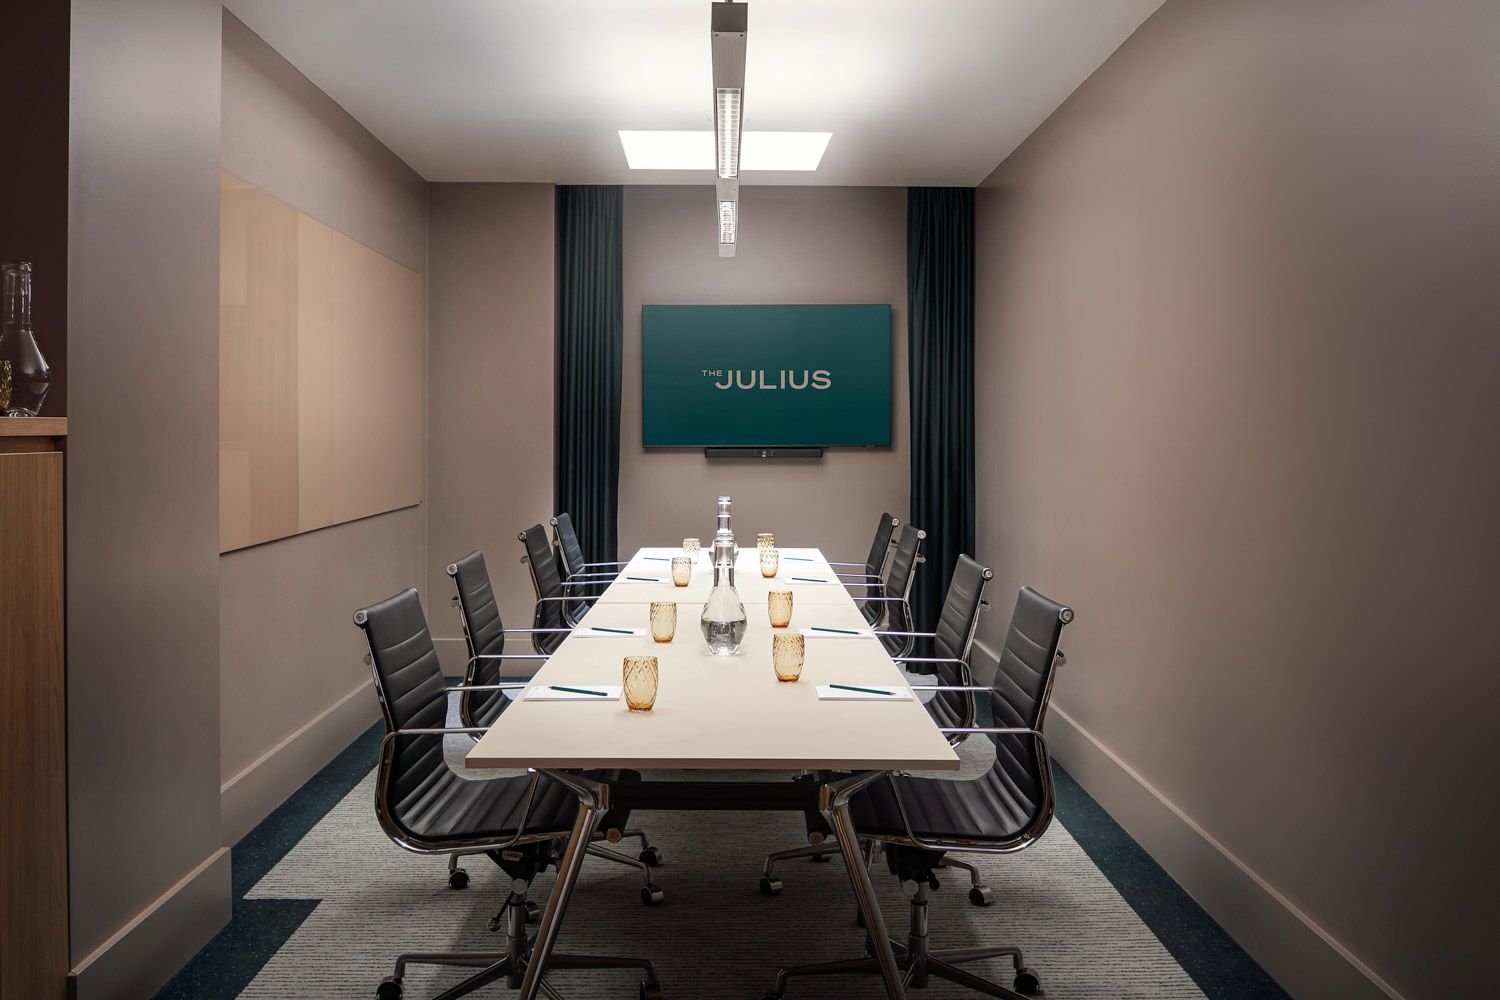 Meeting room A in board setting, The Julius Prague 